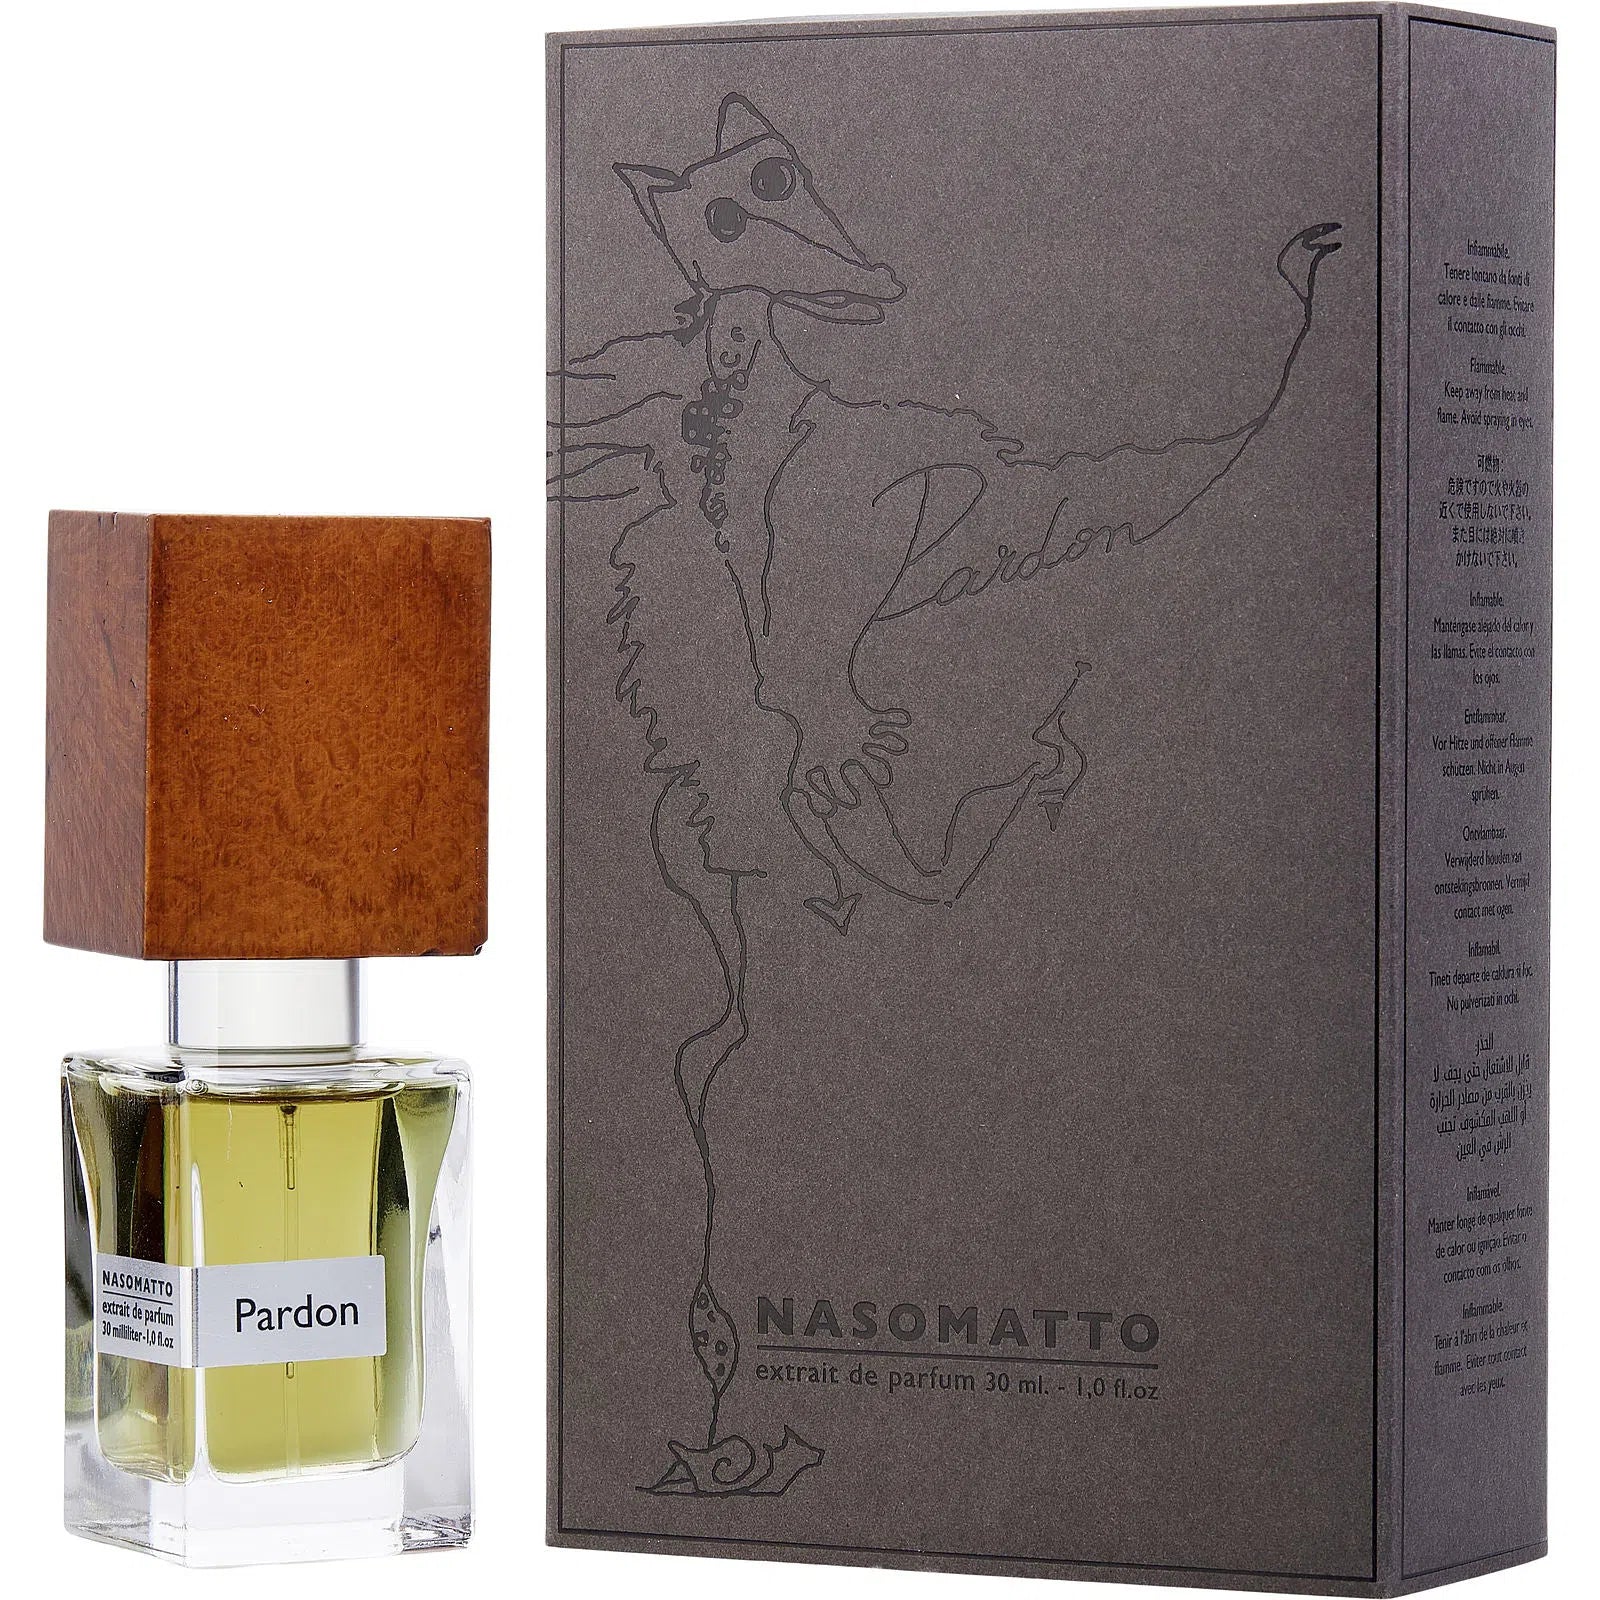 Perfume Nasomatto Pardon Parfum (U) / 30 ml - 8717774840290- Prive Perfumes Honduras